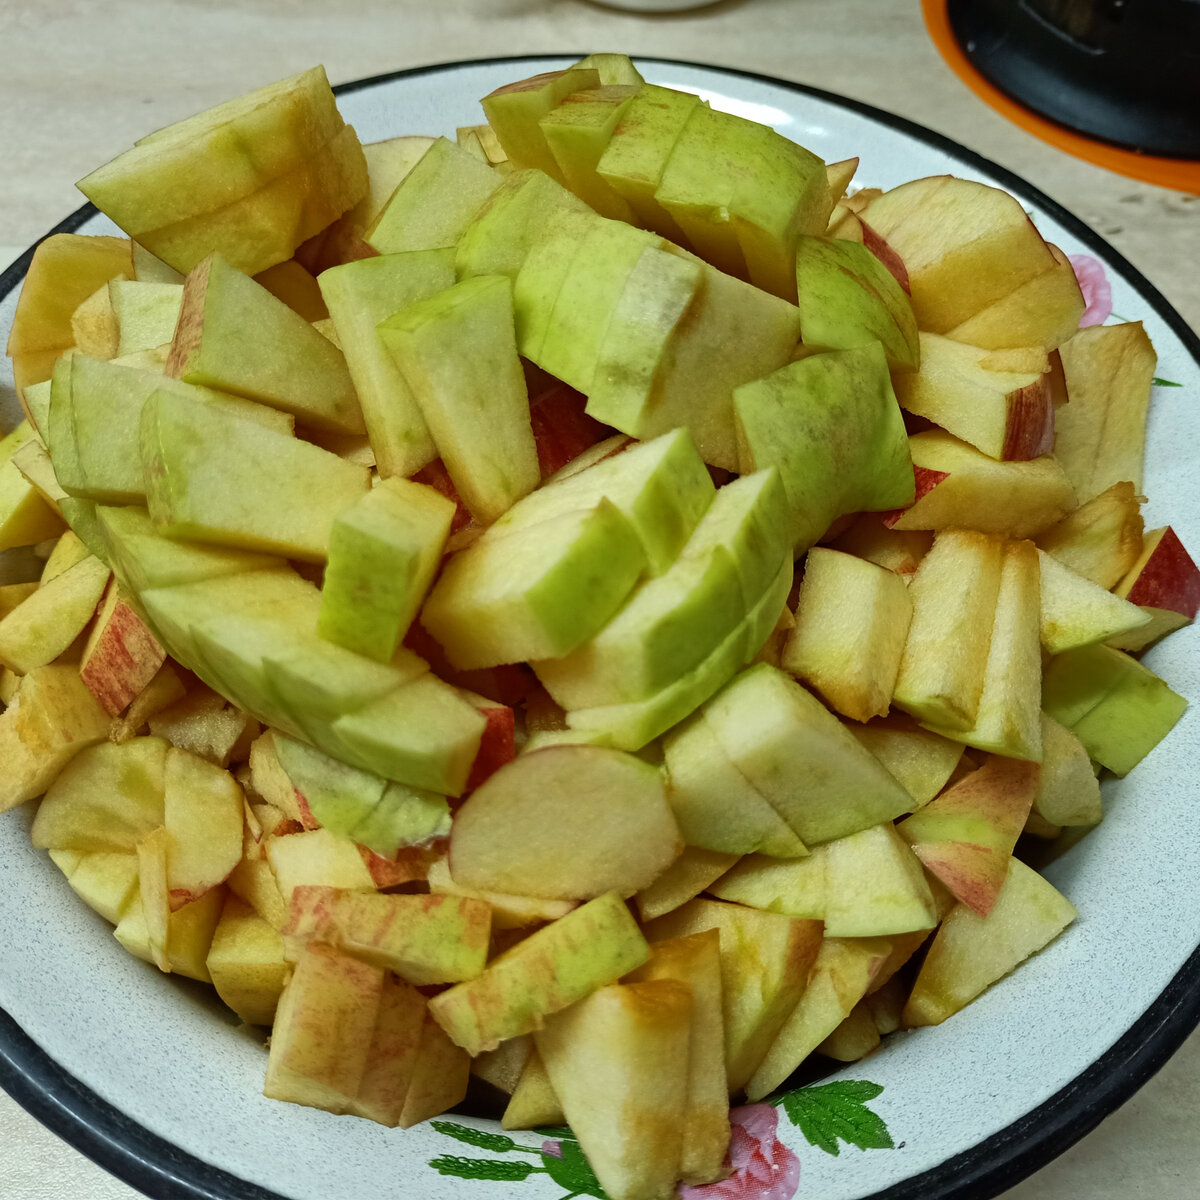 нарезали яблоки